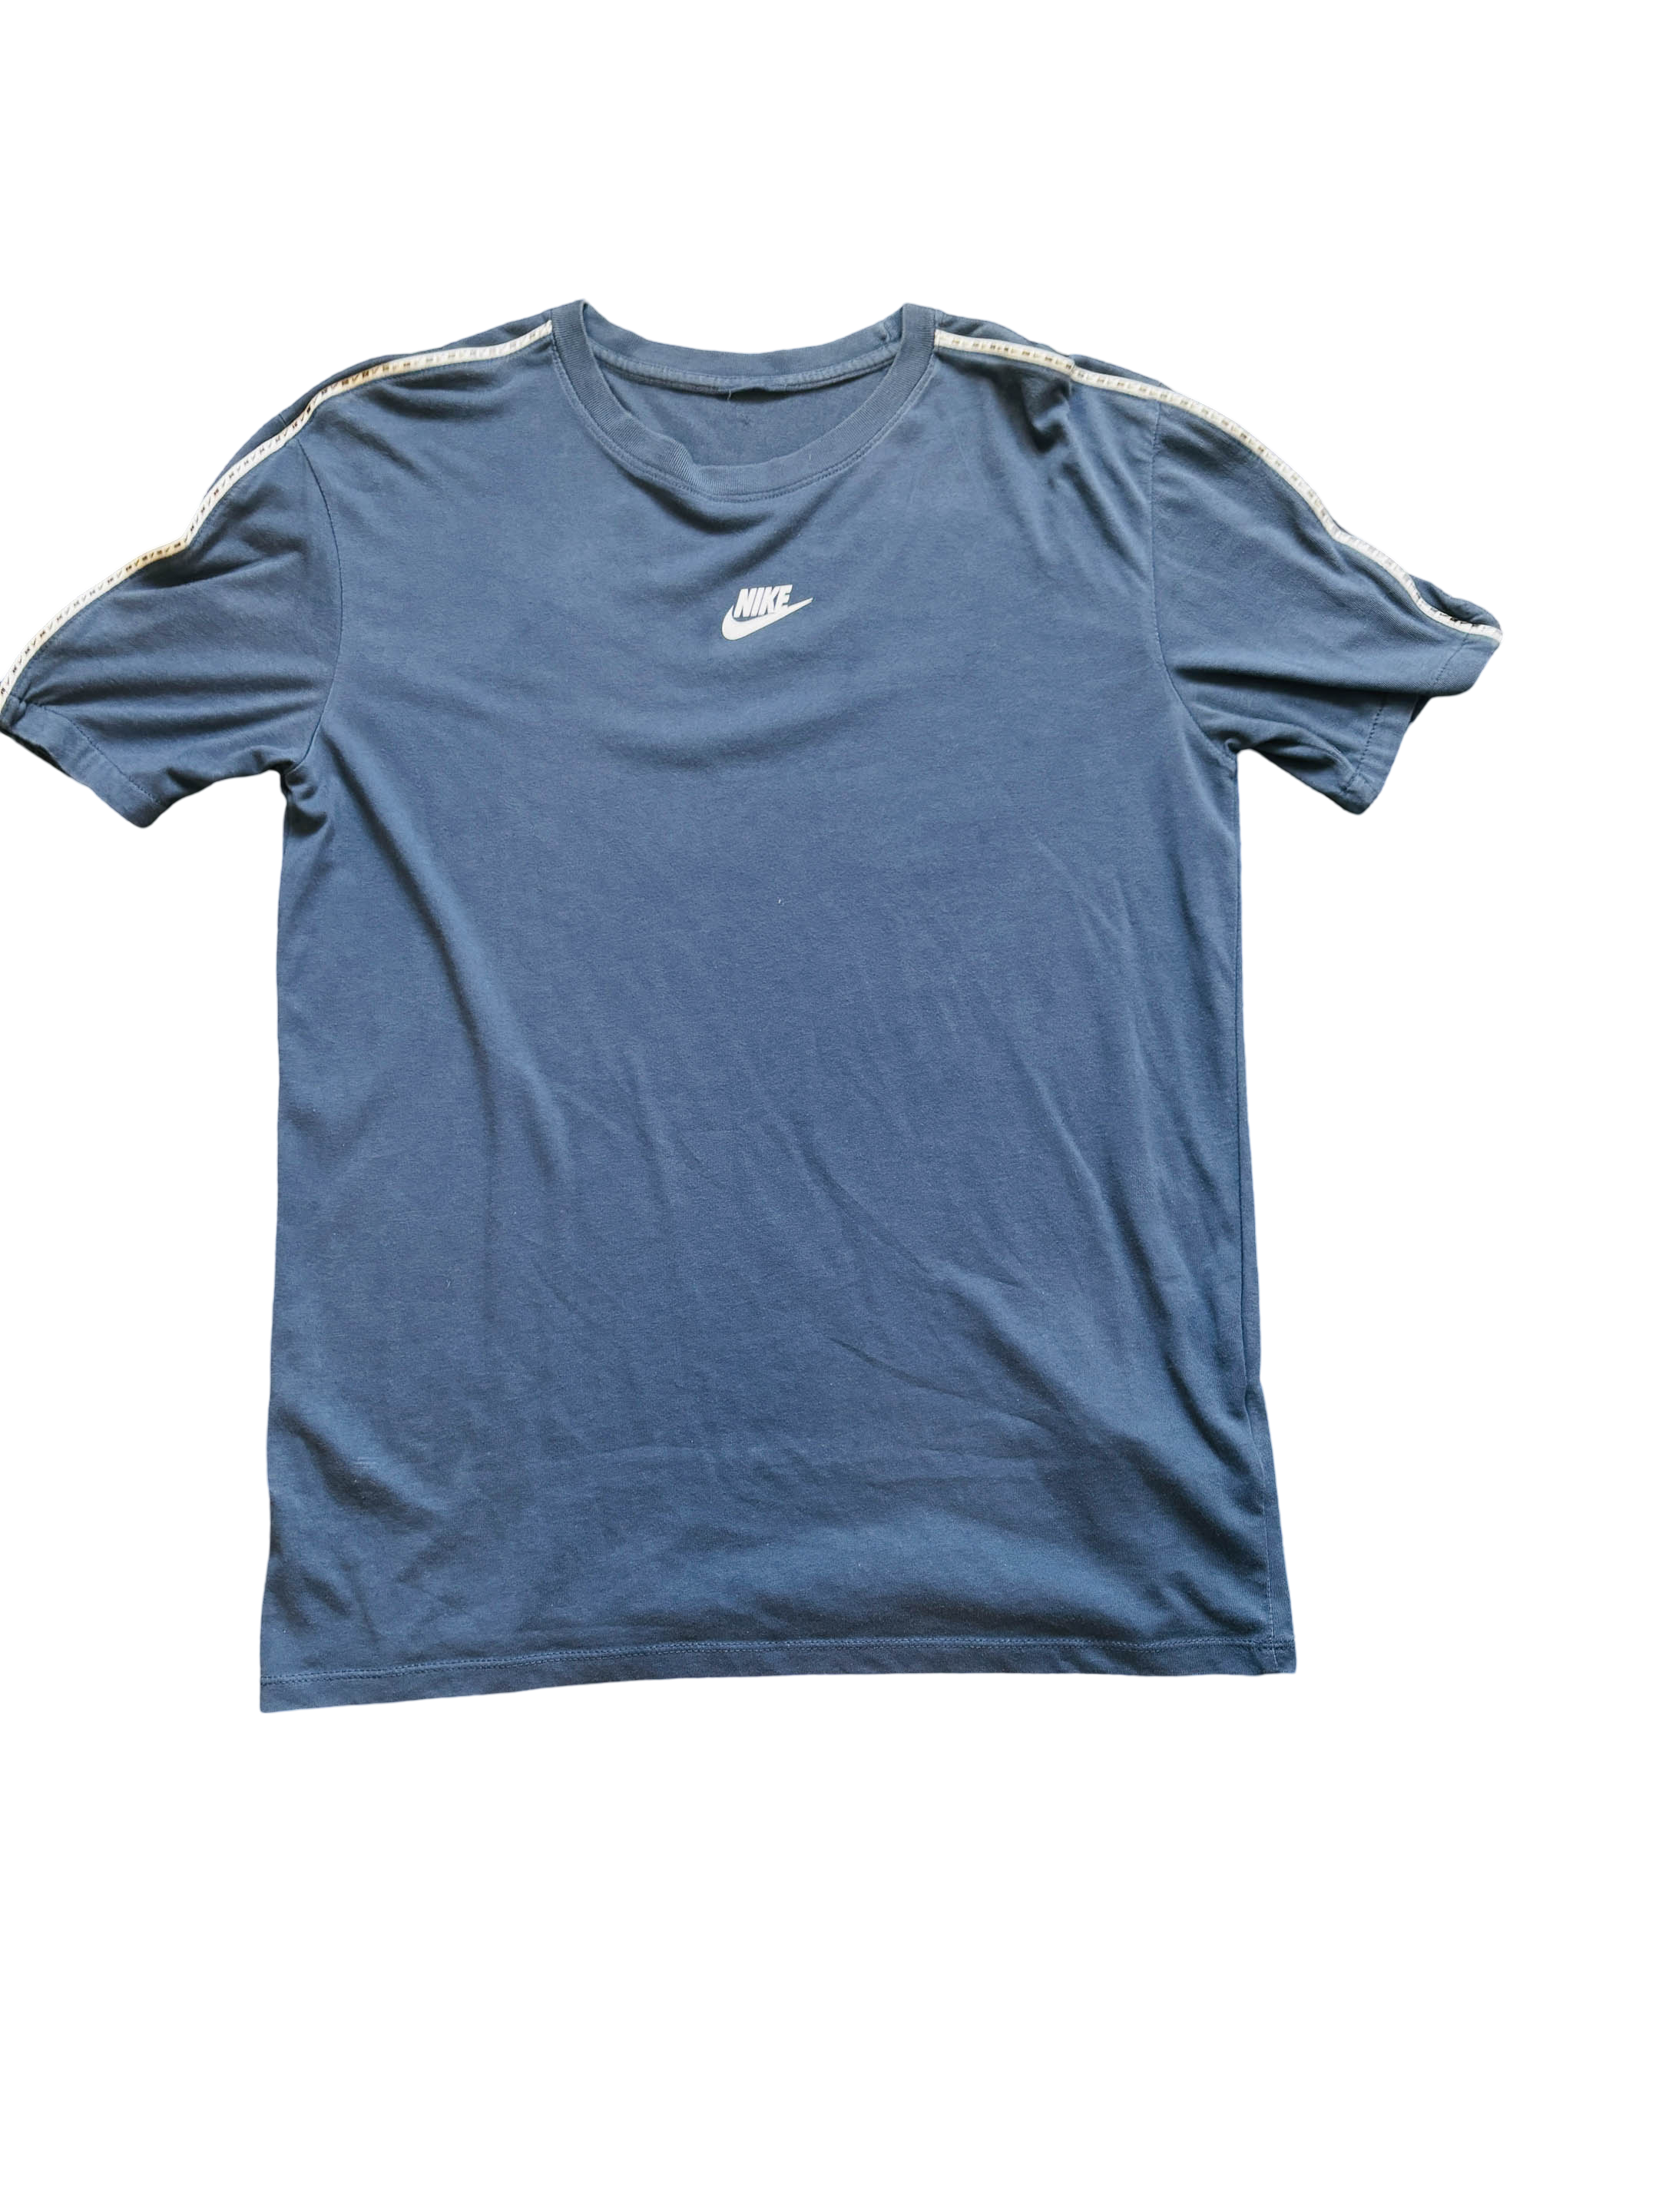 Vintage Nike T-Shirt  - Blue - Medium - Men's Athletic Tee - Short Sleeve - Blue and White - Nike Men's T-Shirt" SKU: 4061